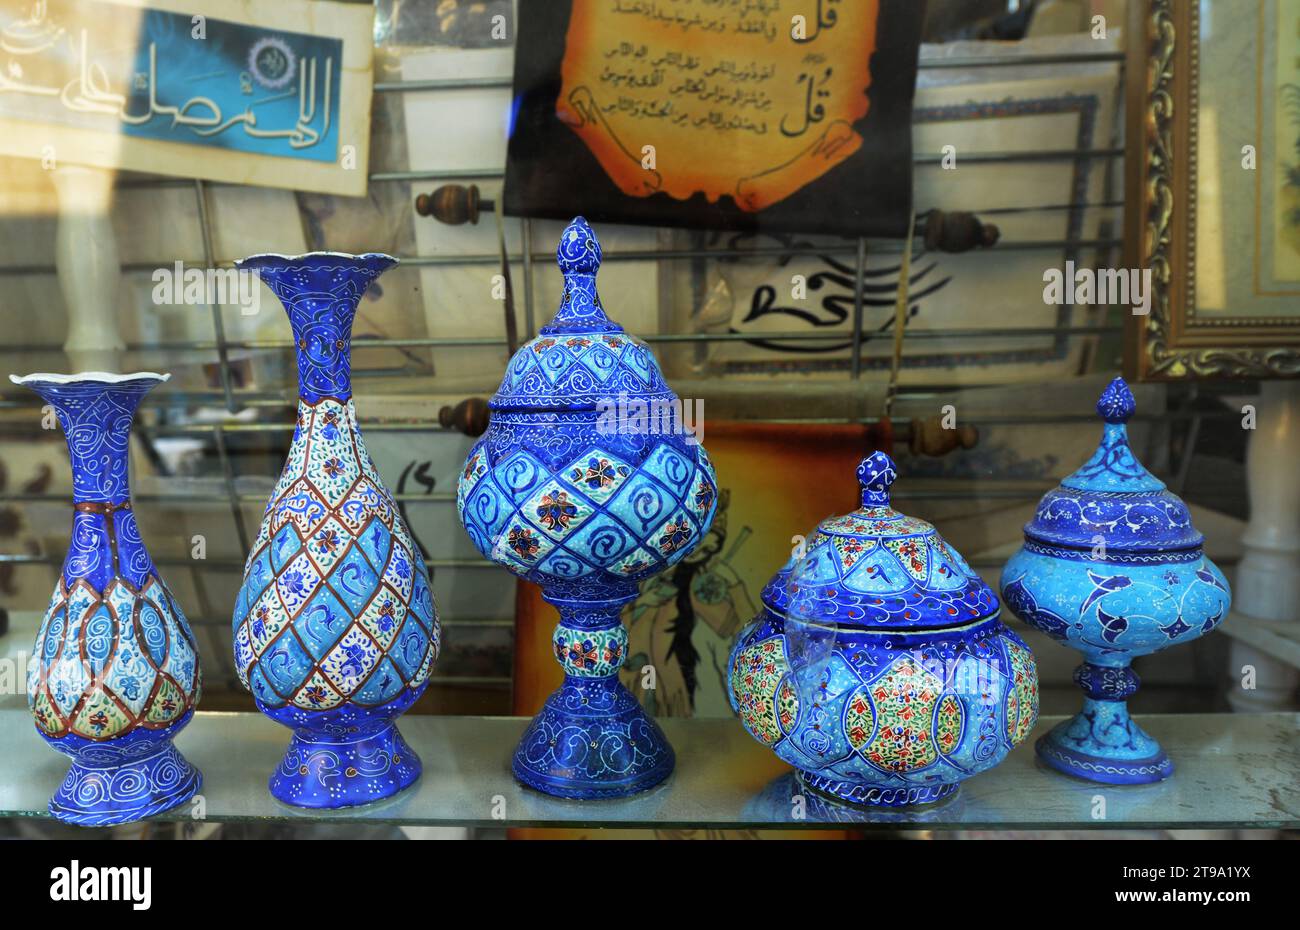 Iranian crafts displayed in a shop in Al Fahidi Historical Neighborhood in Dubai, UAE. Stock Photo